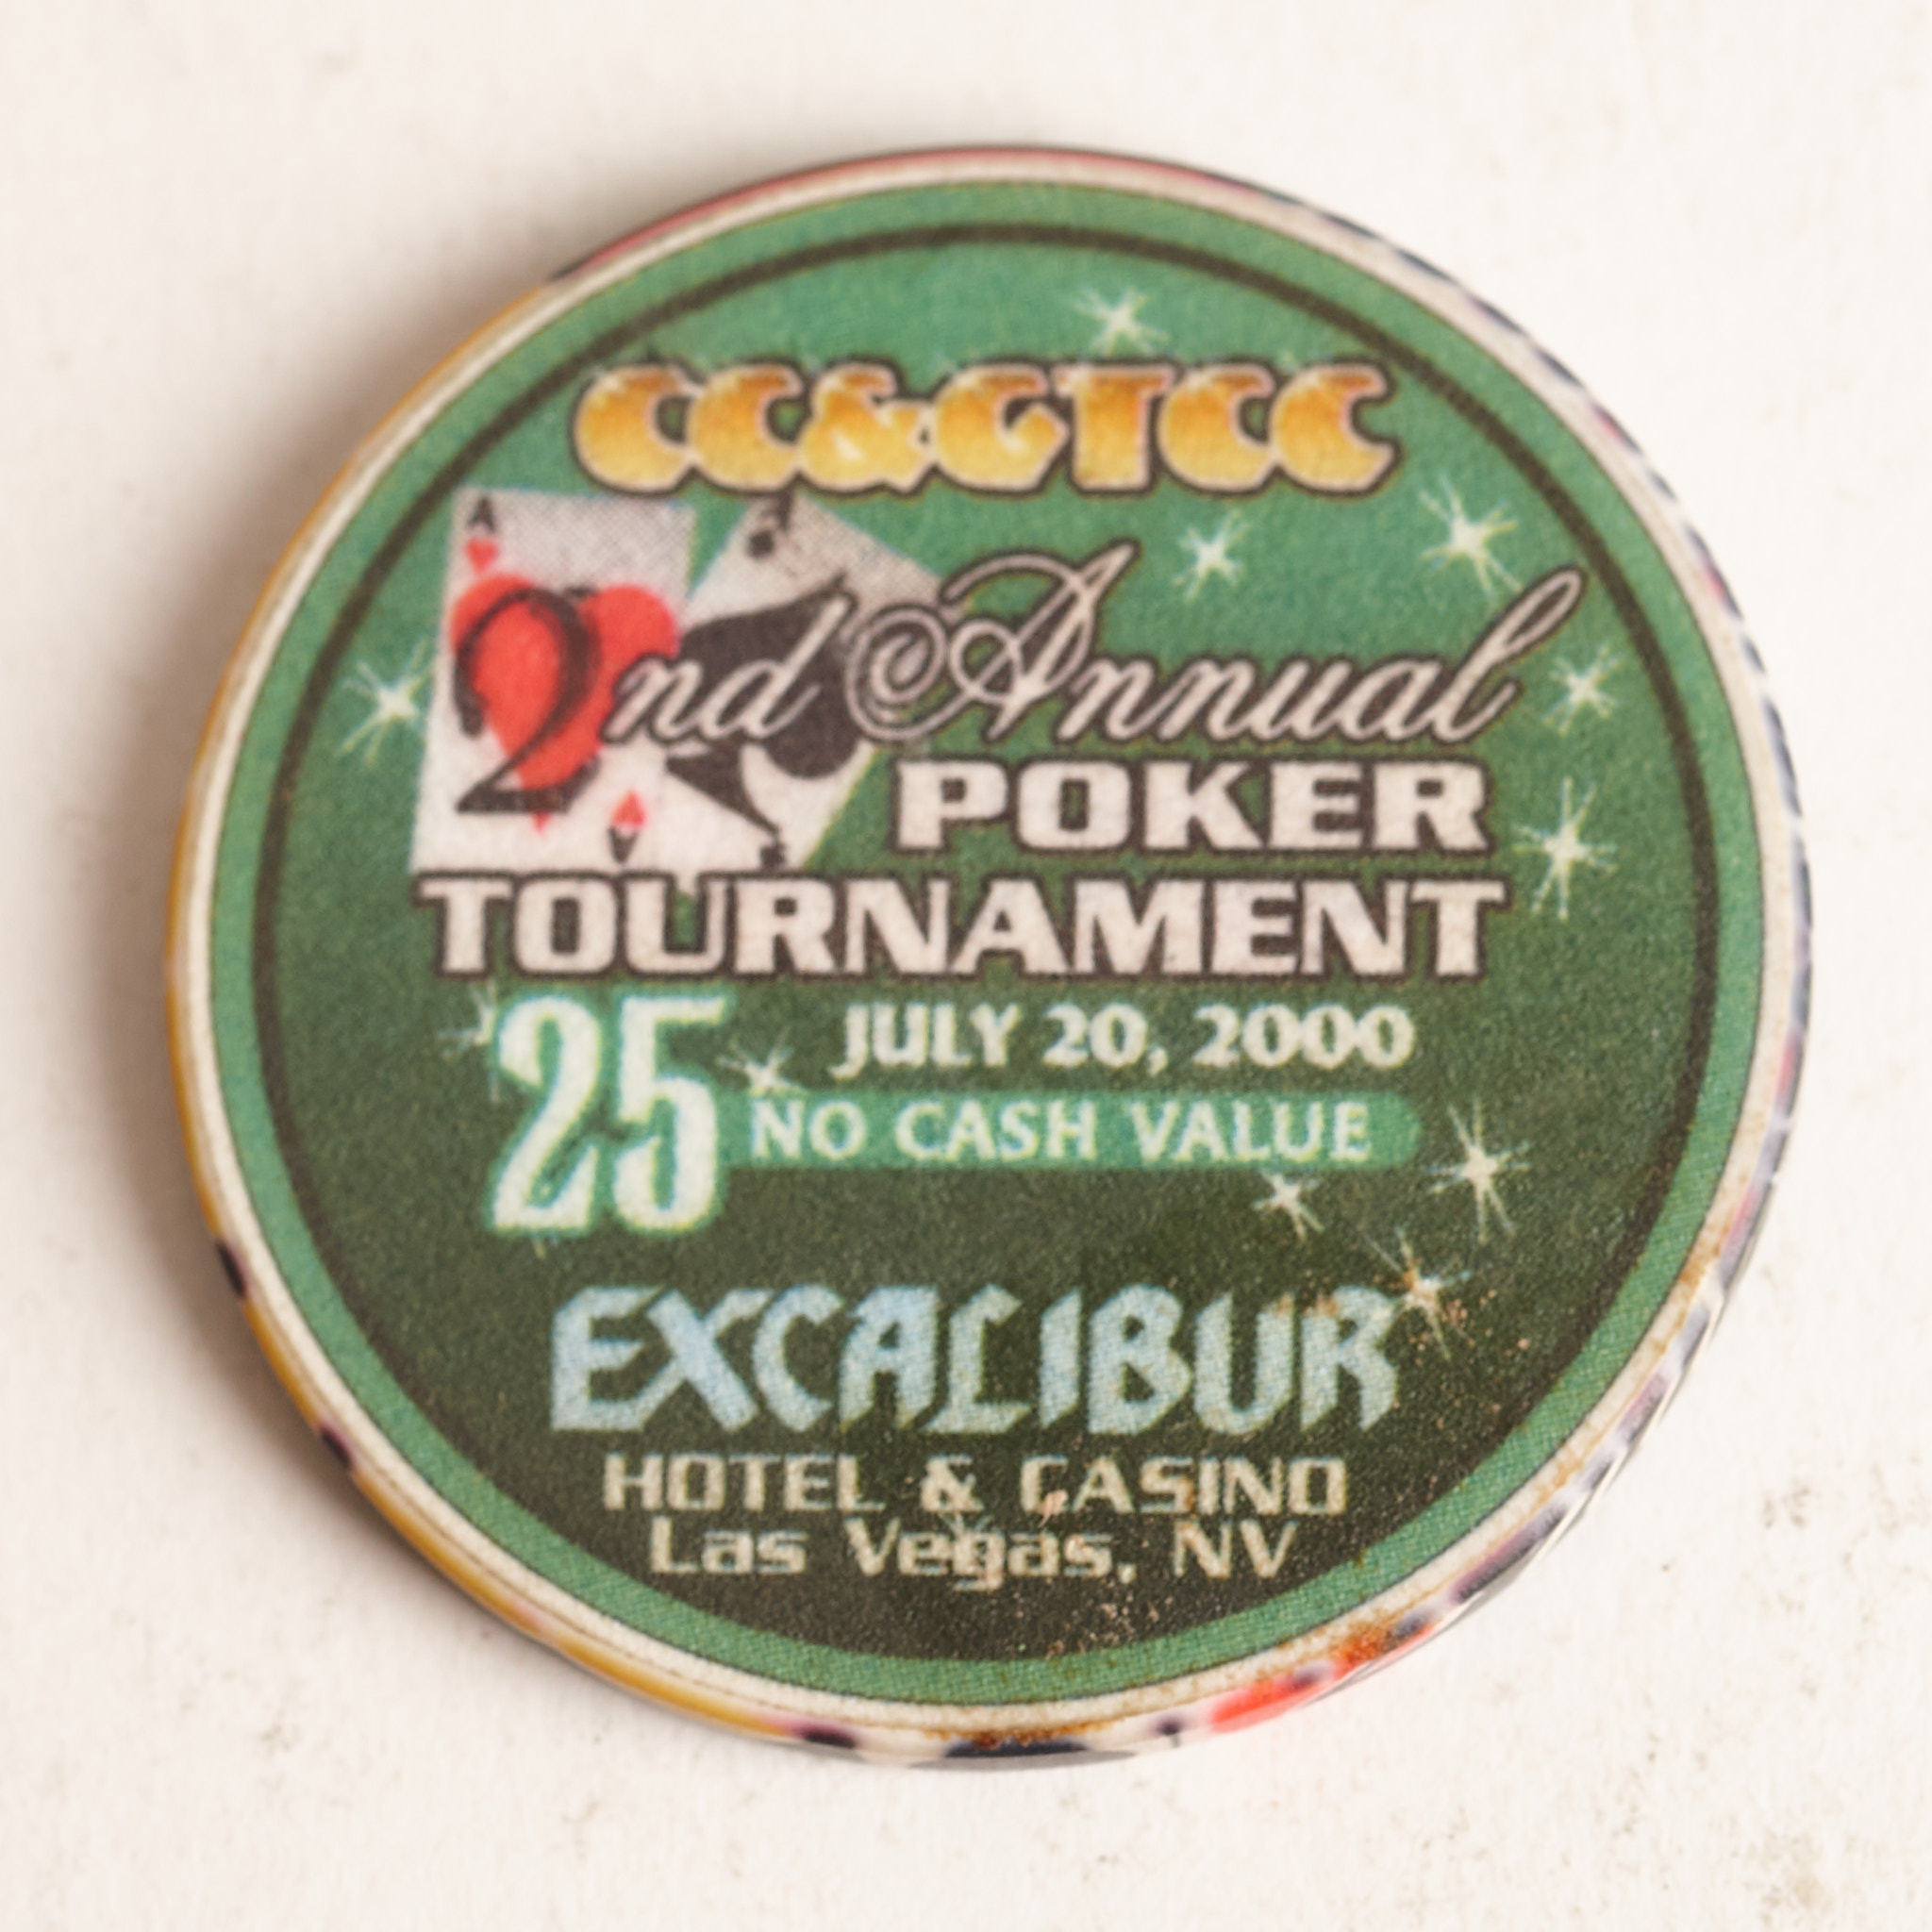 CC&GTCC 2nd ANNUAL POKER TOURNAMENT, 2000, Poker Card Guard Chip